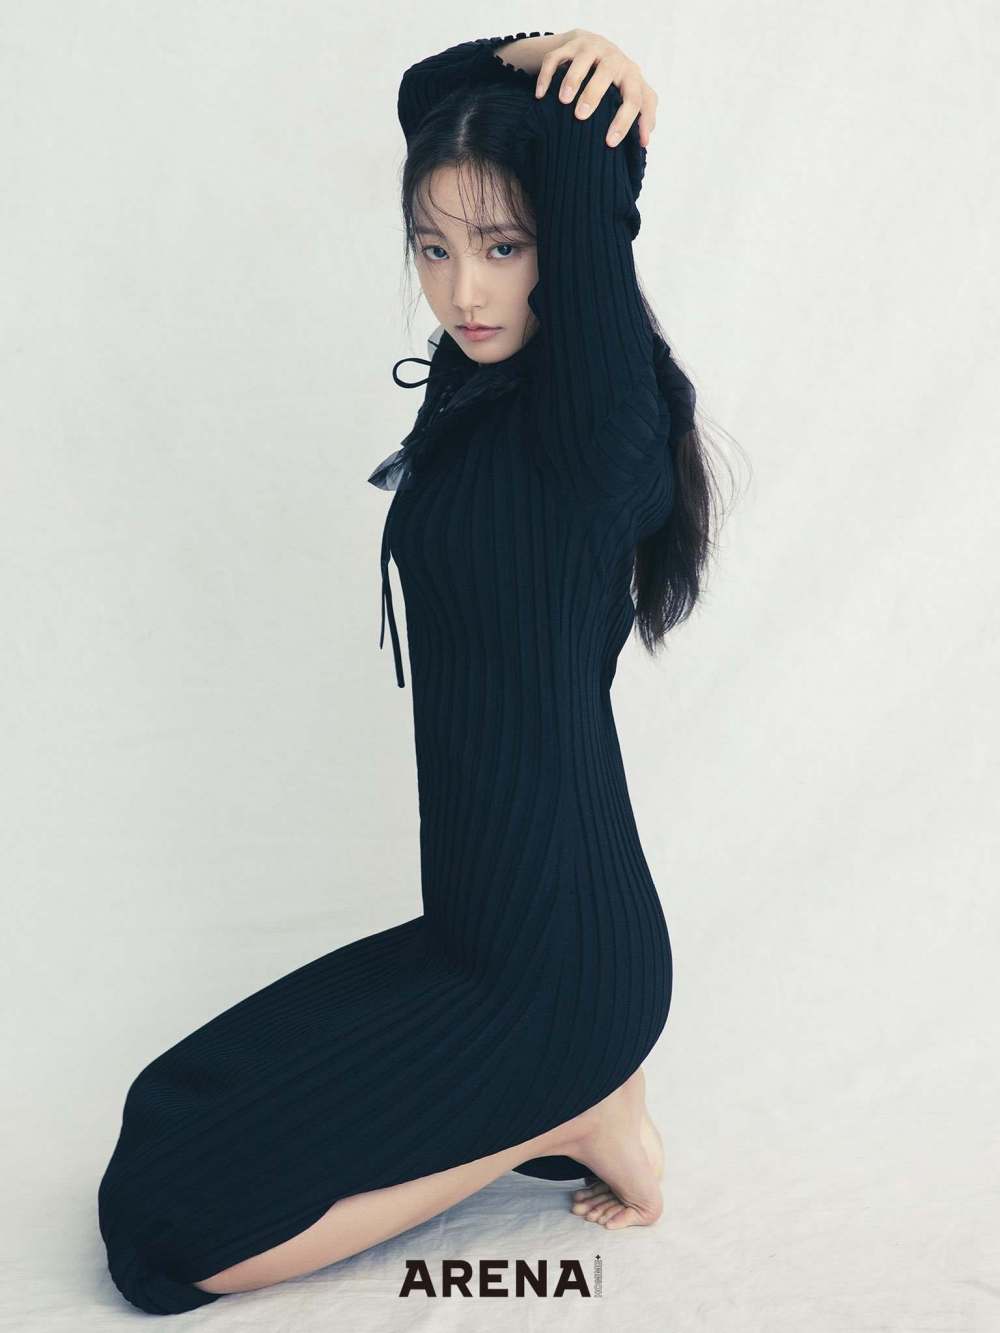 Yeonwoo Sexy and Hottest Photos , Latest Pics